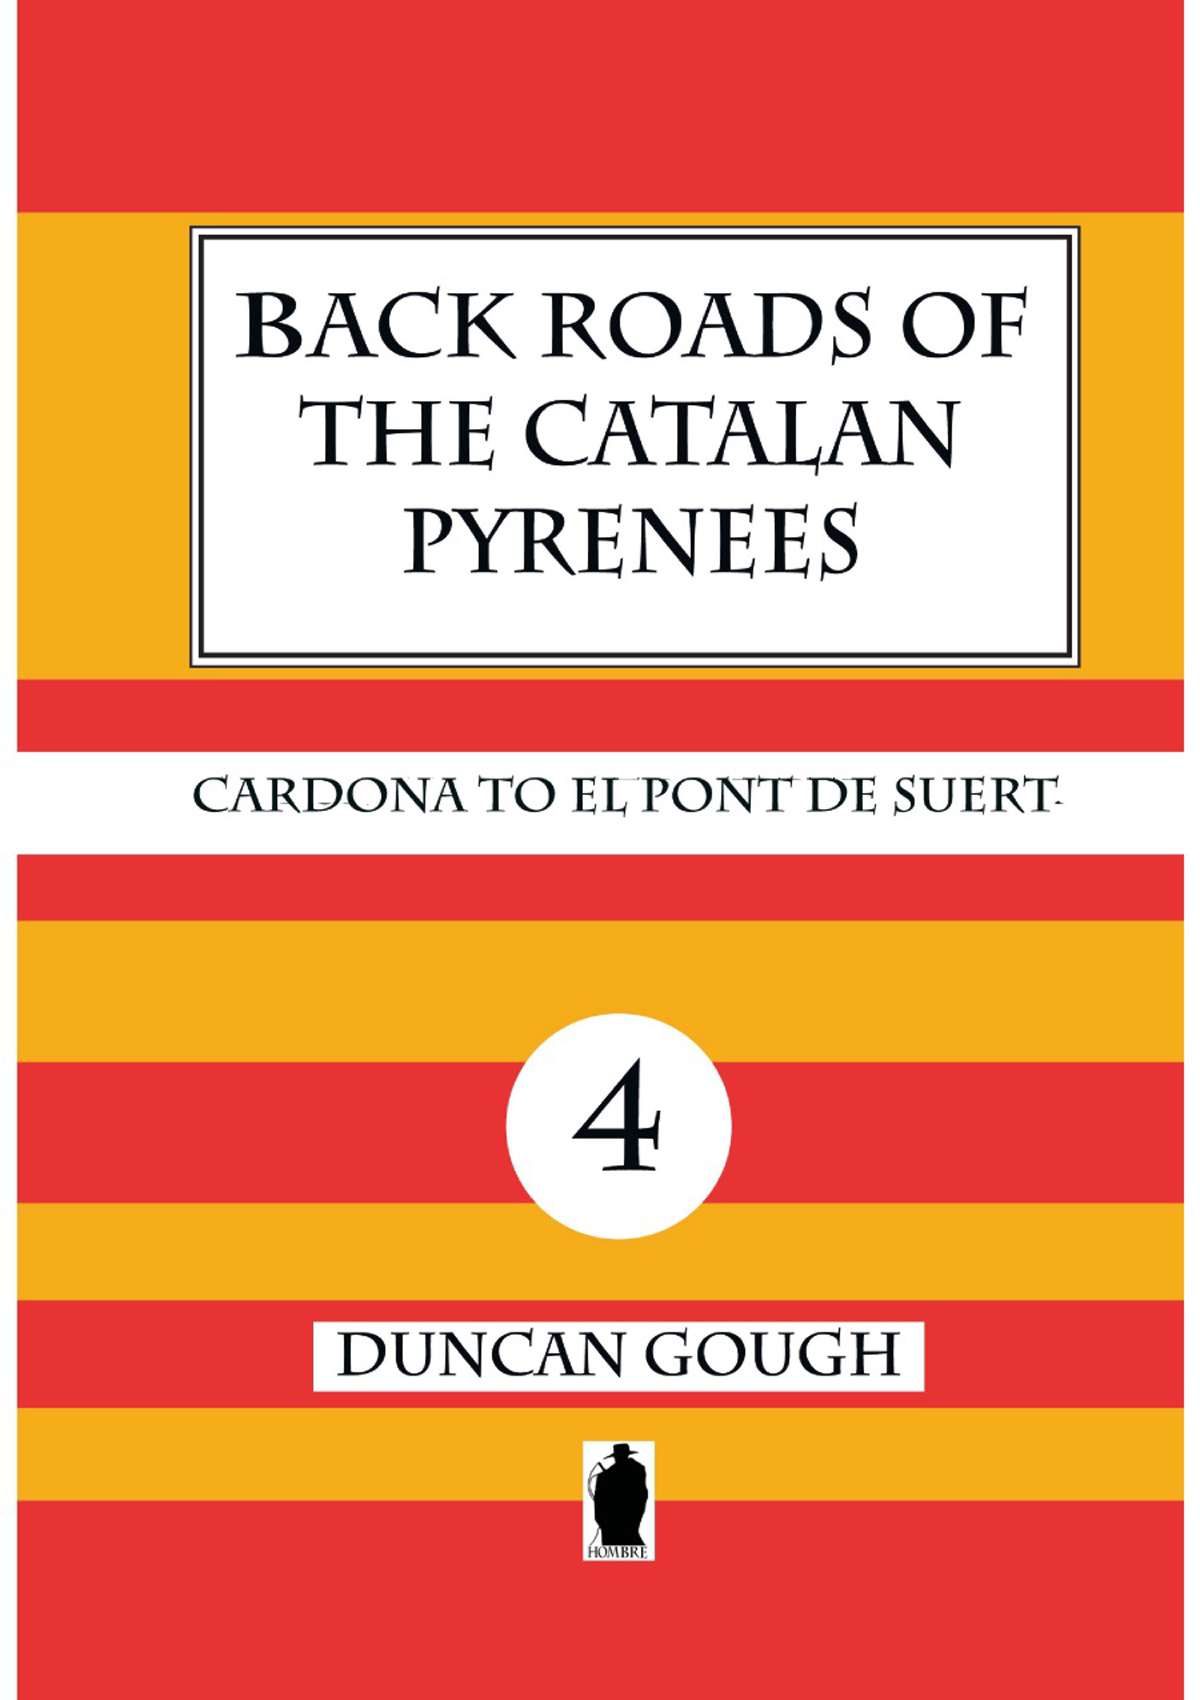 Back Roads of the Catalan Pyrenees - 4 - Cardona to El Pont de Suert